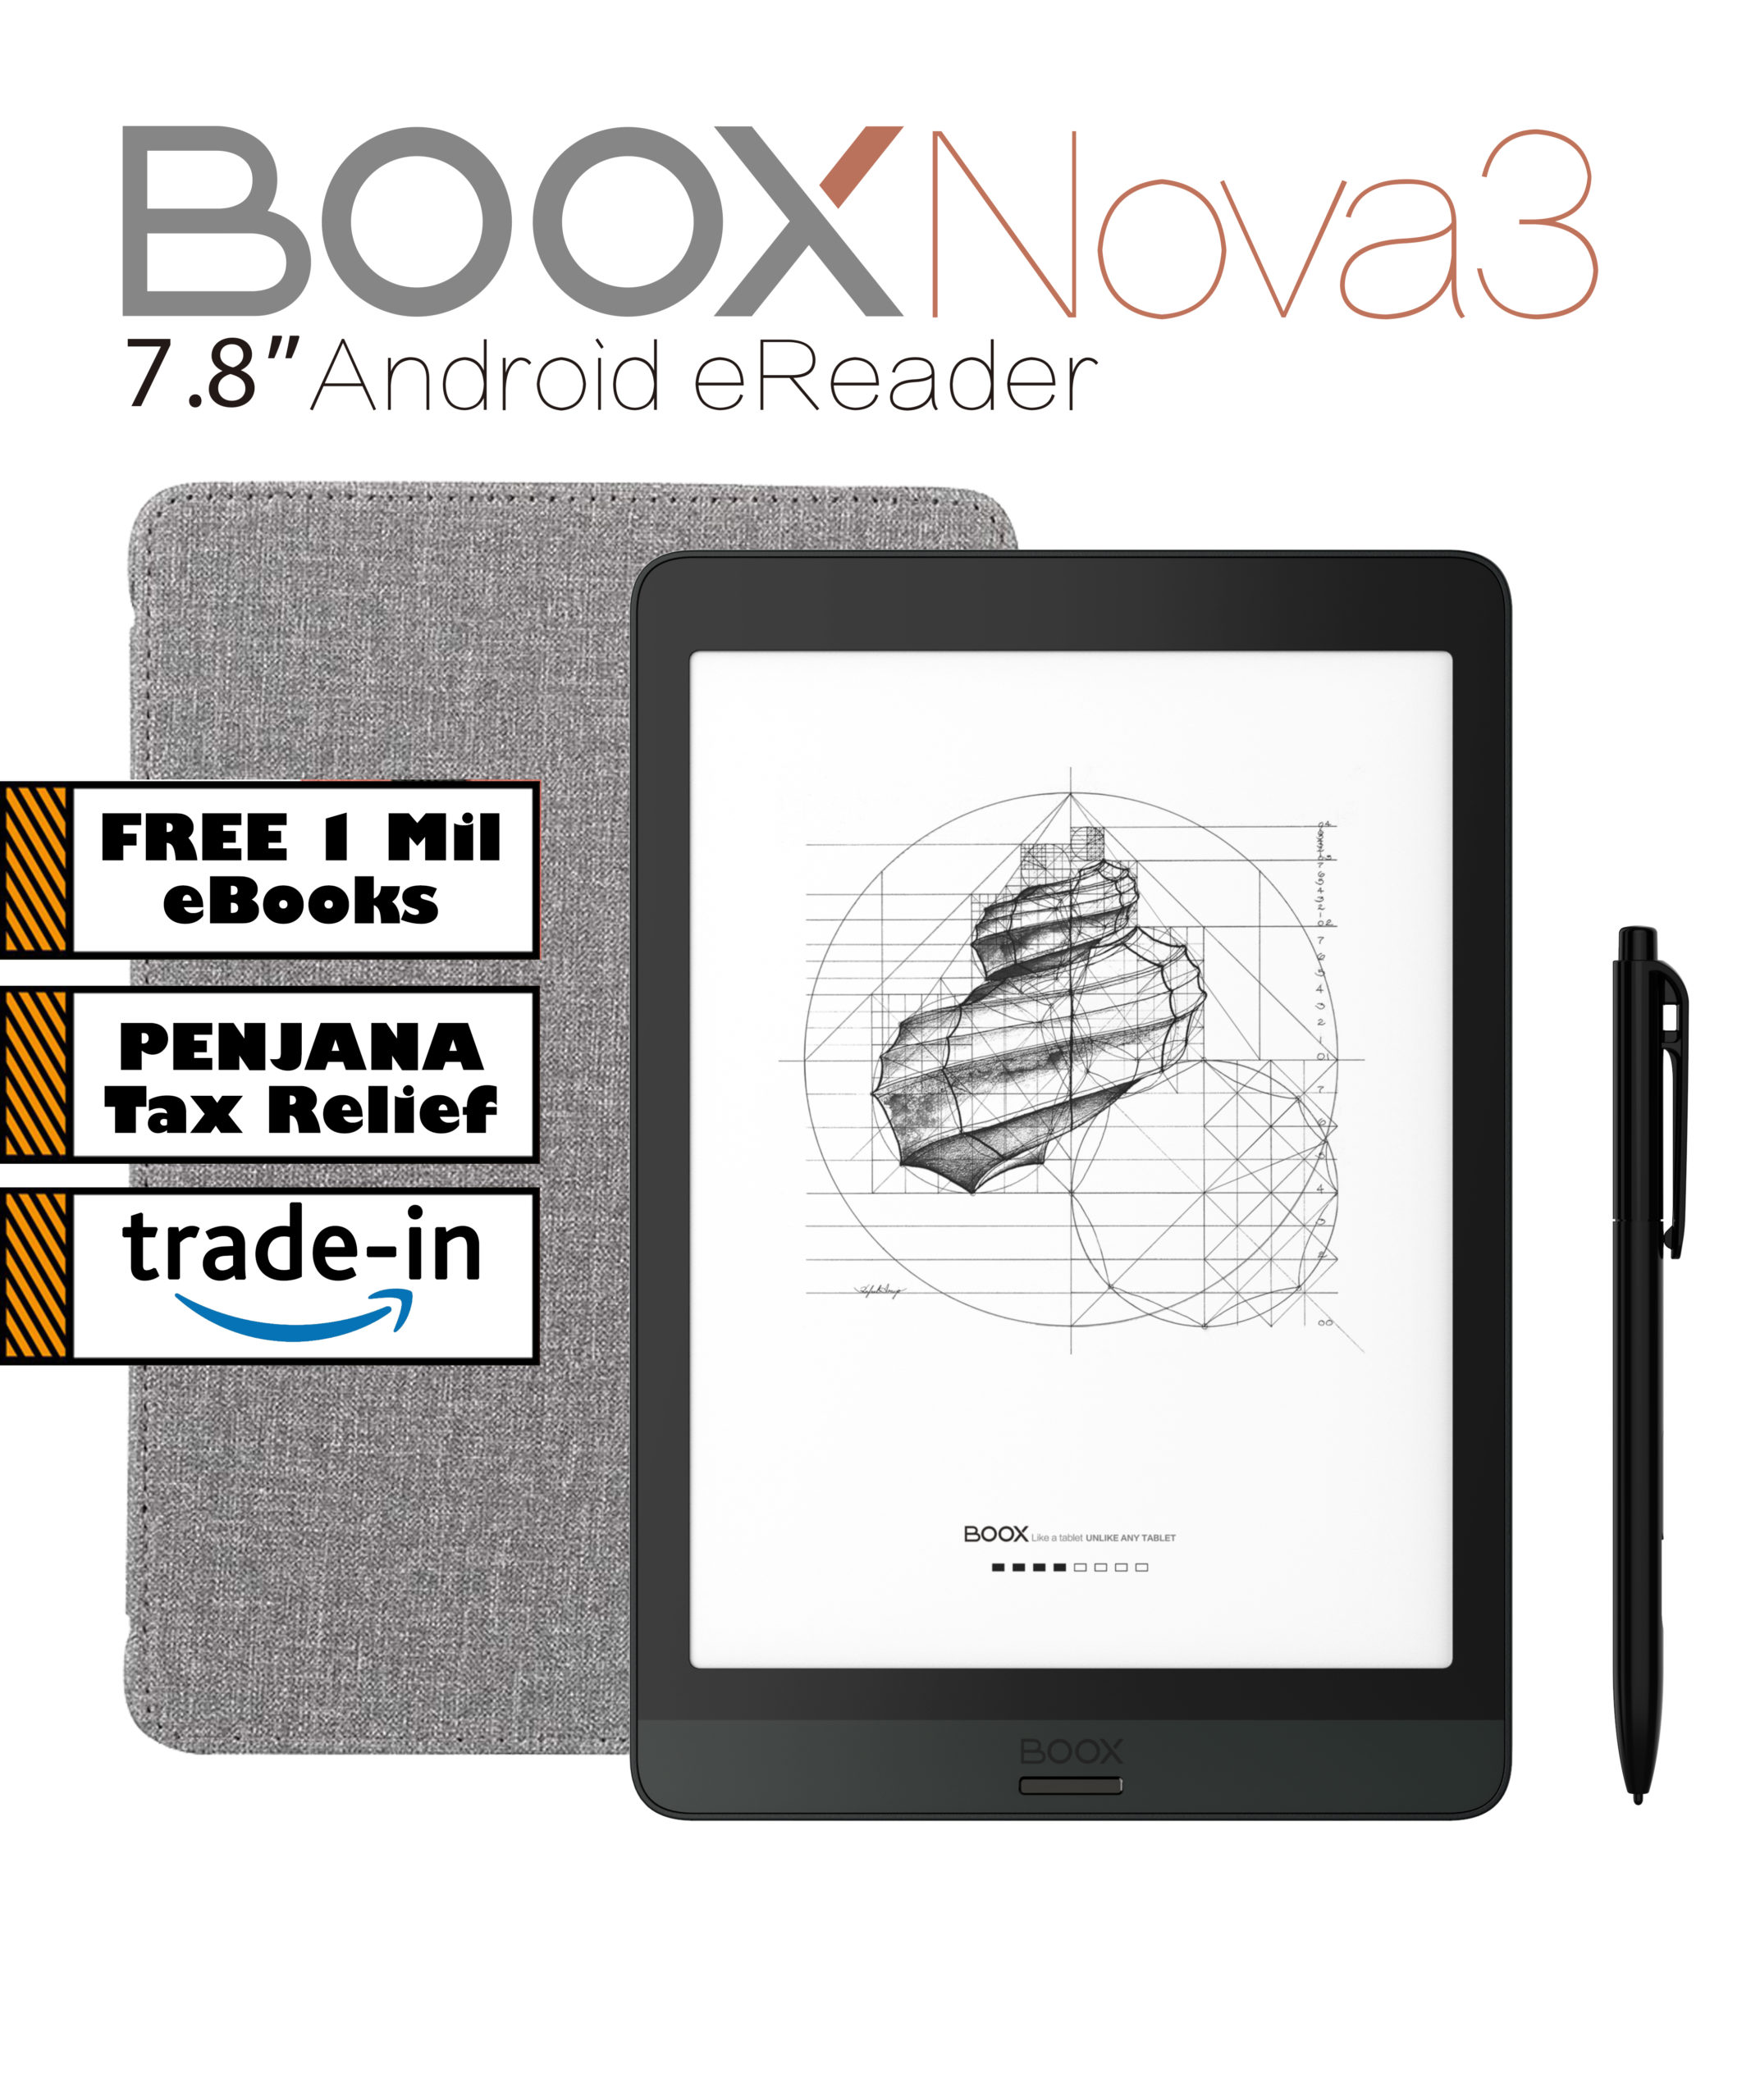 BOOX-Nova3-7.8-Android-eReader-Trade-In-Free-1-Million-eBooks-(1080x1080)-PENJANA-Tax-Relief in Malaysia